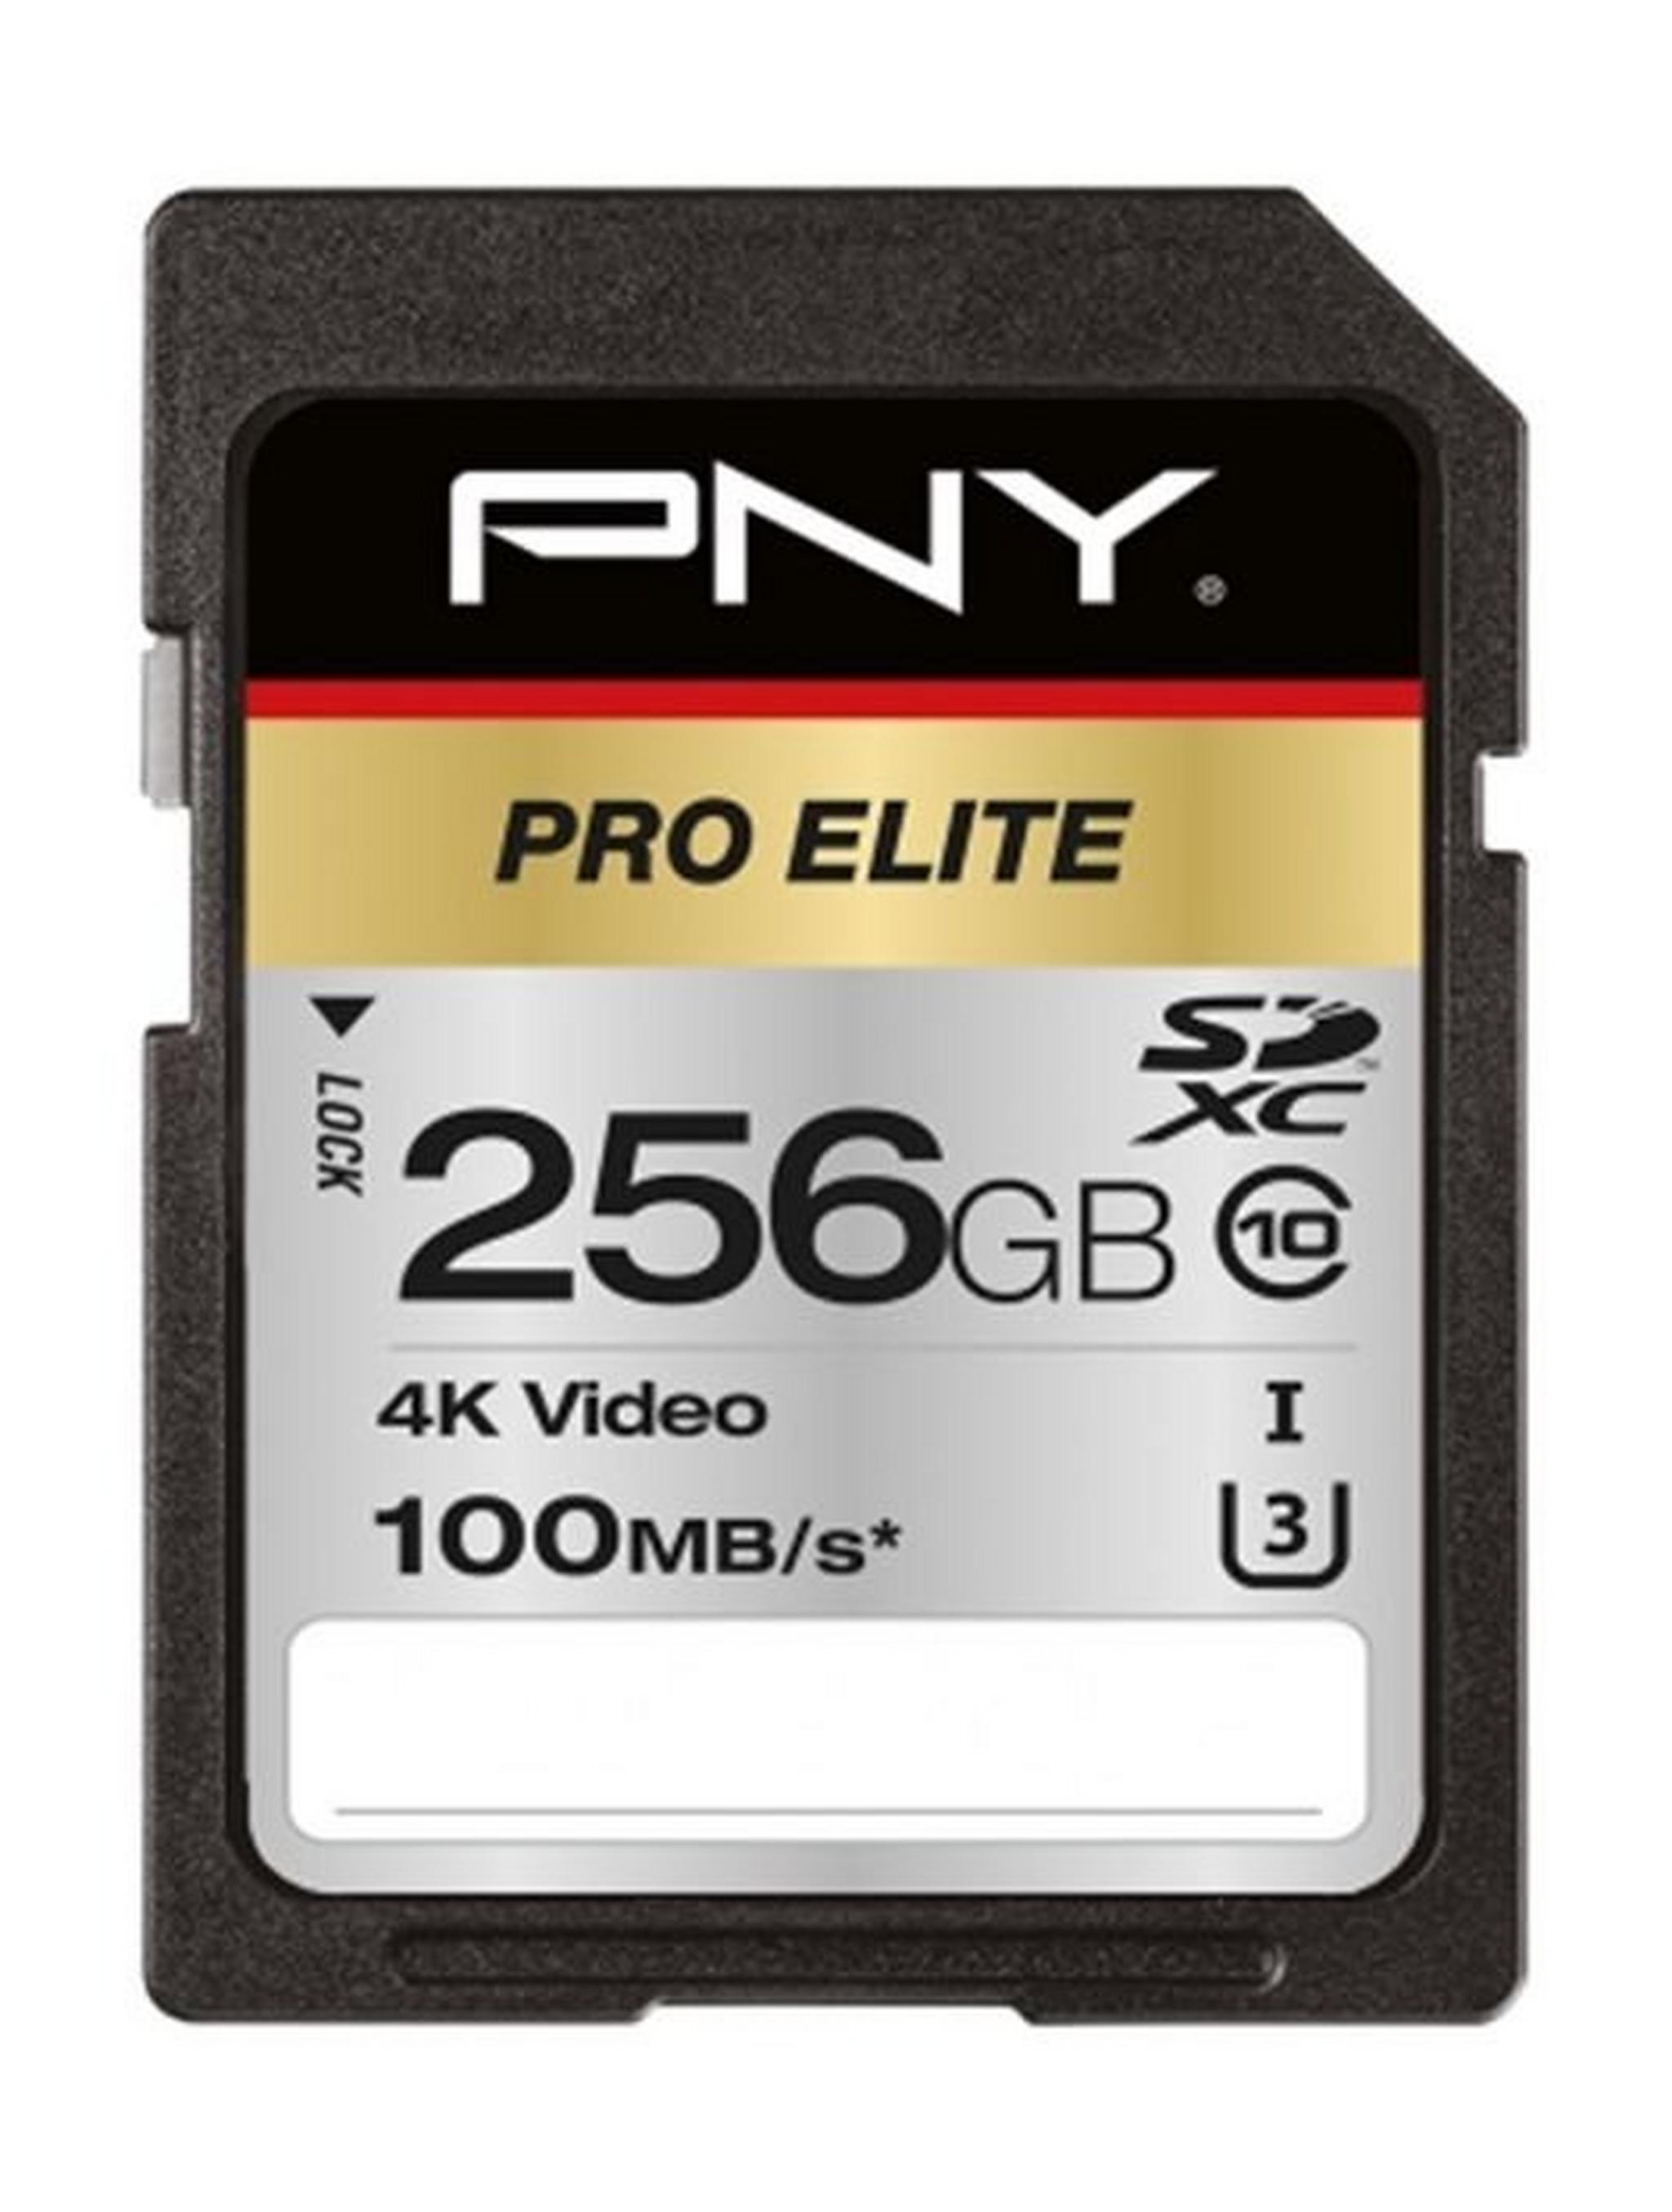 Pny Pro Elite Class 10 SDXC Memory Card - 256GB